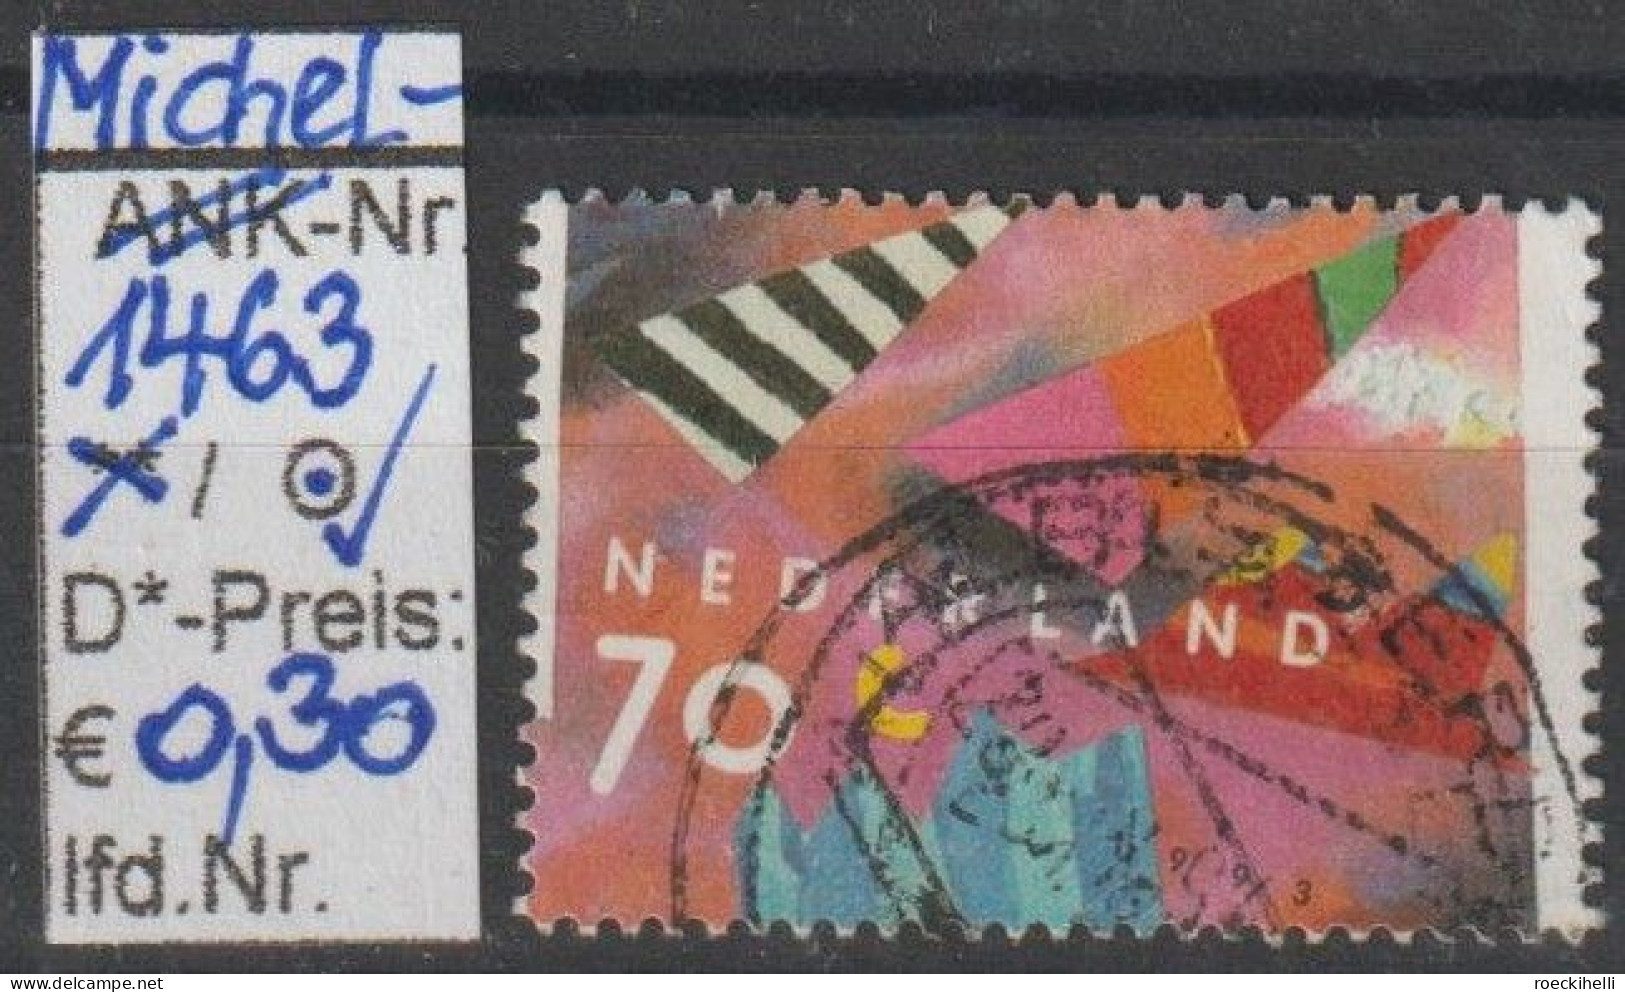 1993 - NIEDERLANDE - SM "Grußmarken" 70 C Mehrf. - O  Gestempelt - S.Scan (1463o Nl) - Gebruikt